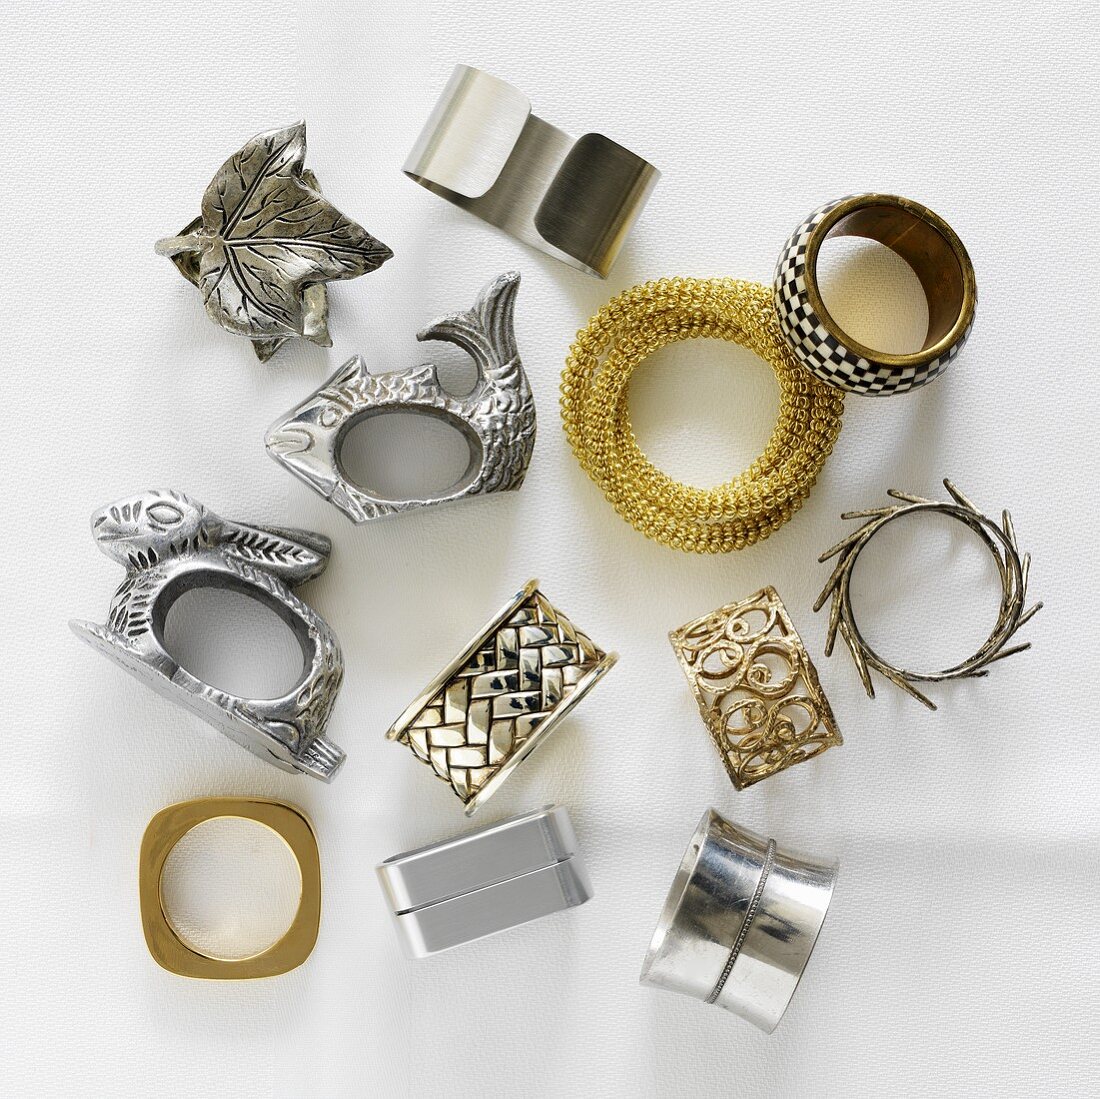 An assortment of metal napkin rings